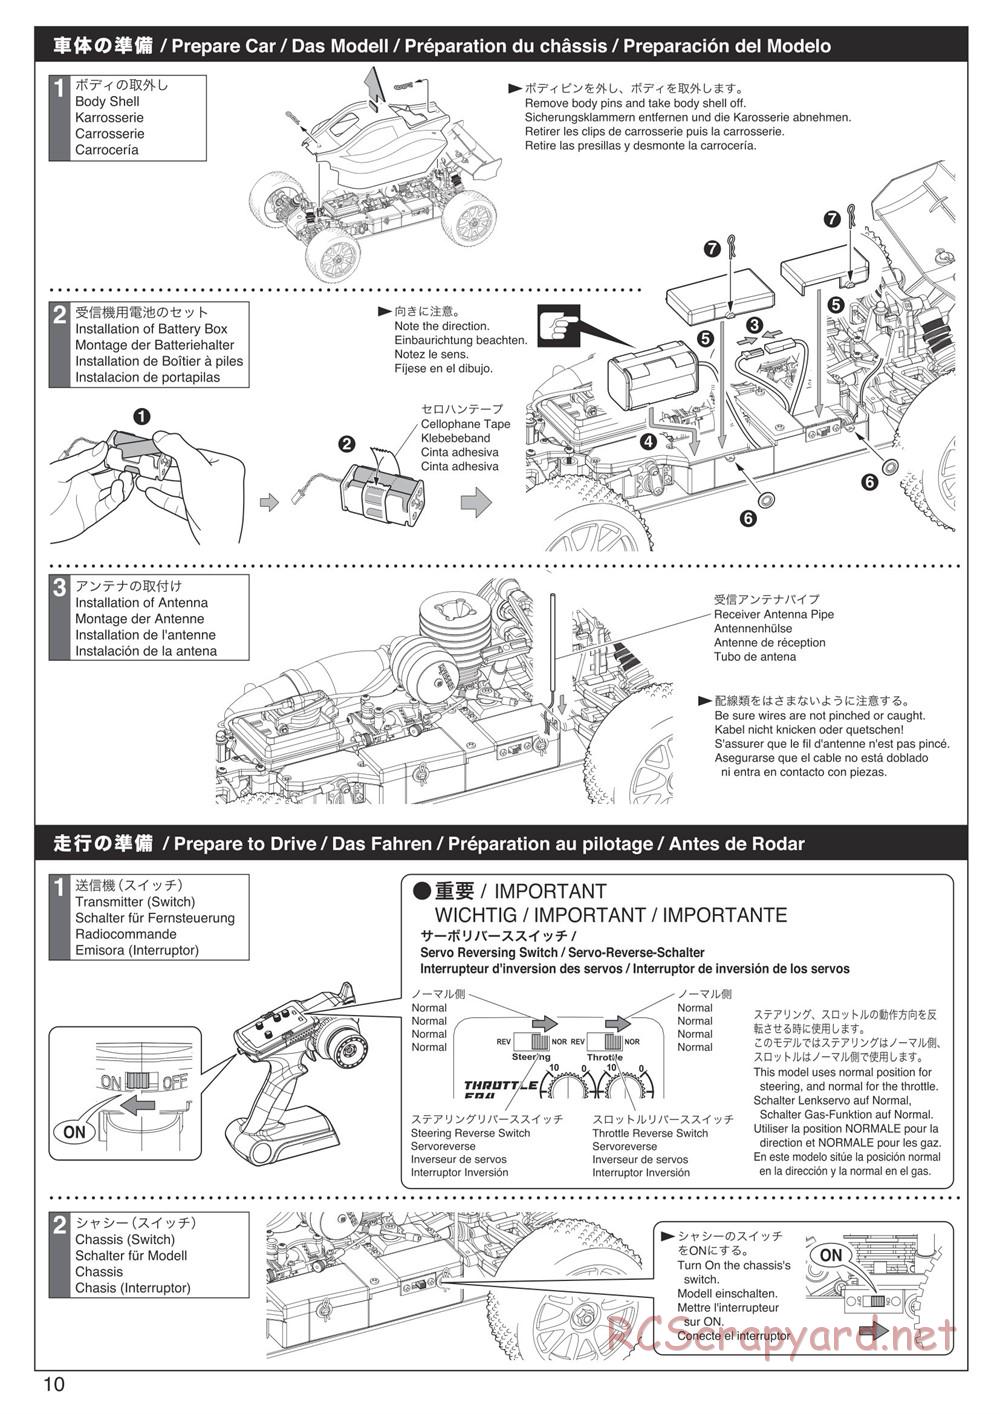 Kyosho - DBX 2.0 - Manual - Page 10